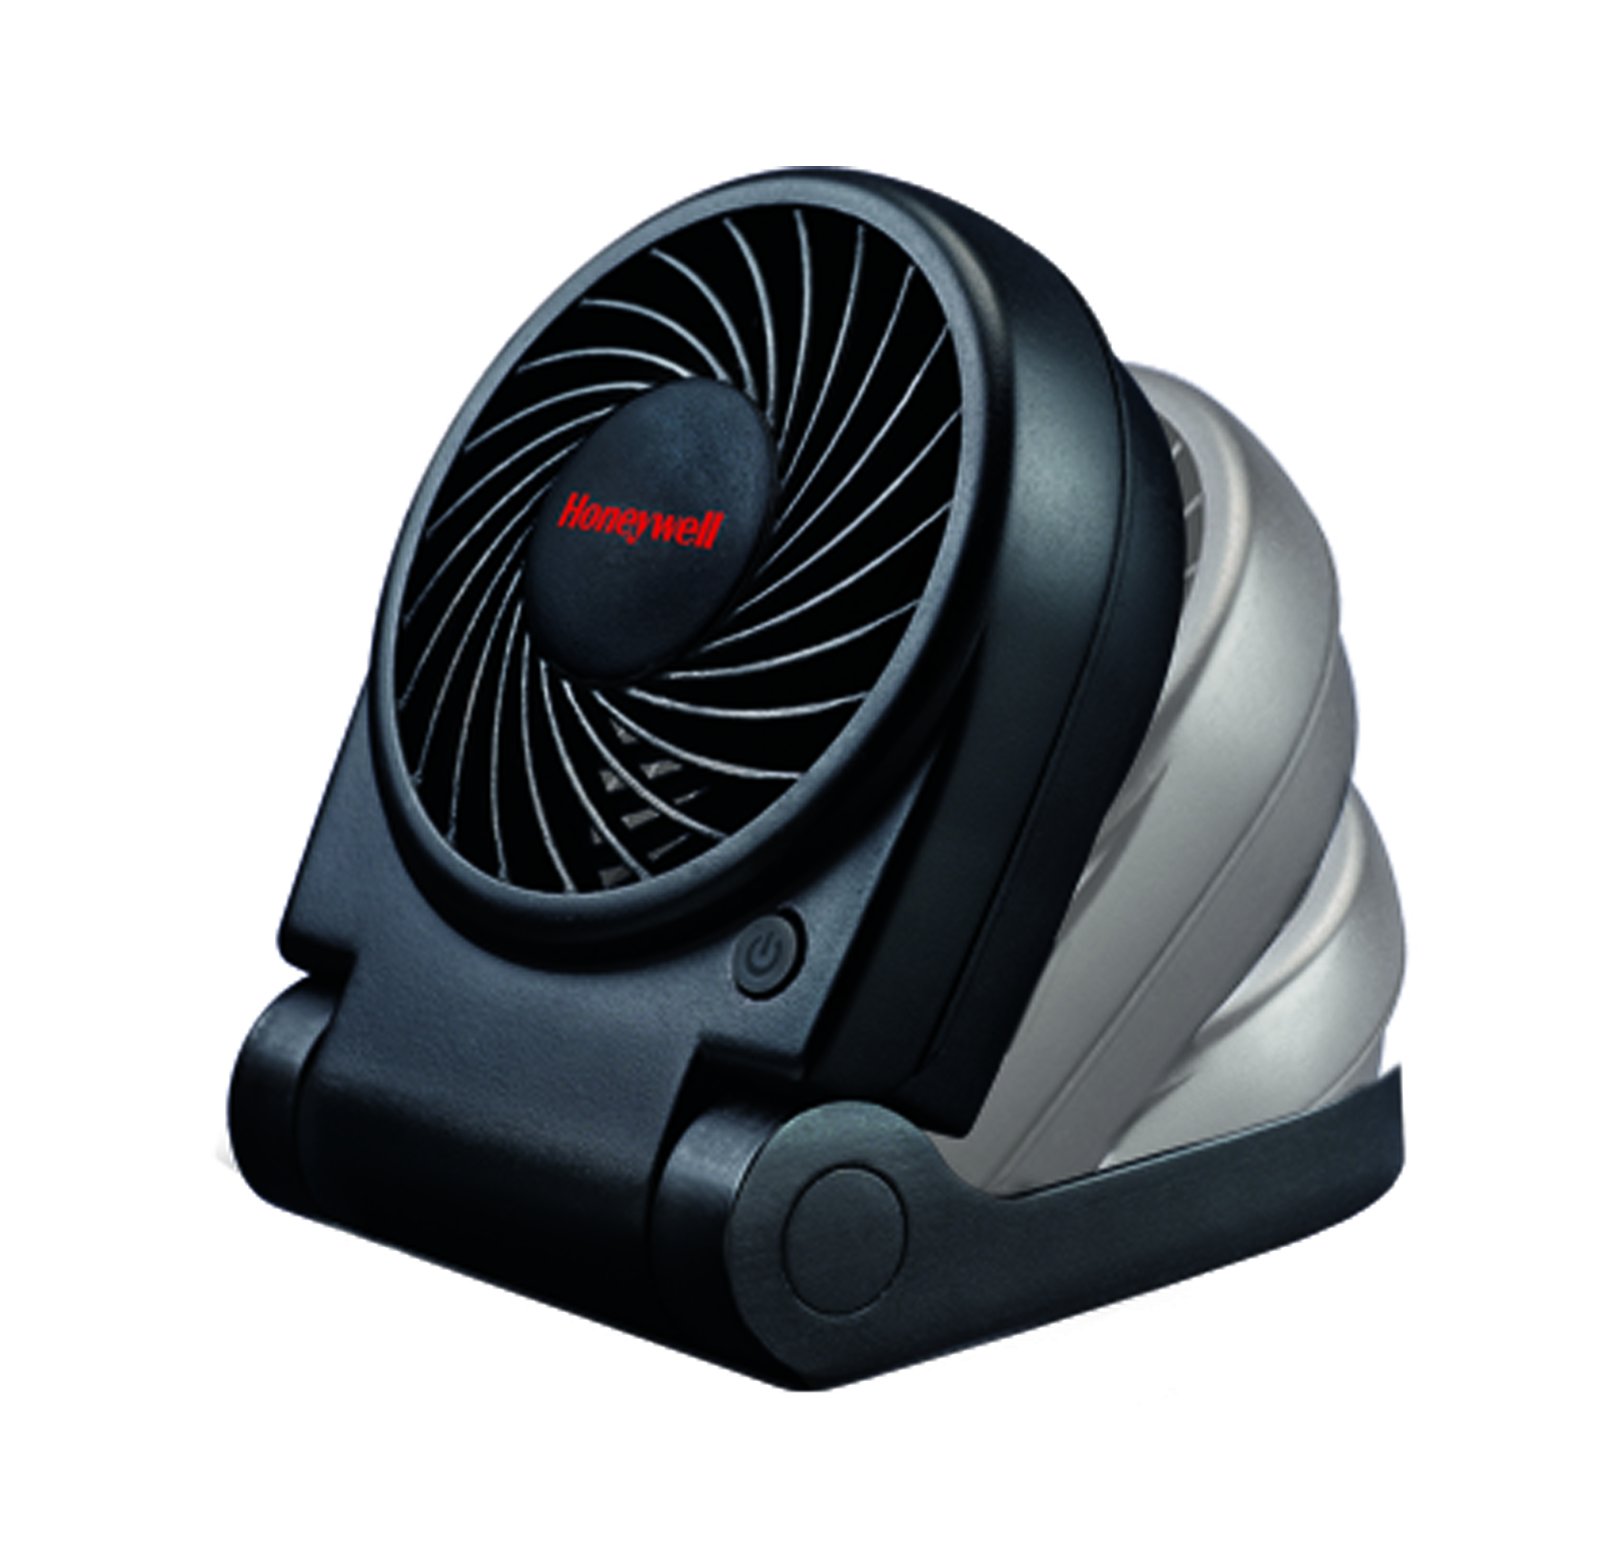 Honeywell HTF090B Turbo on the Go Personal Fan, Black – Small, Portable Fan